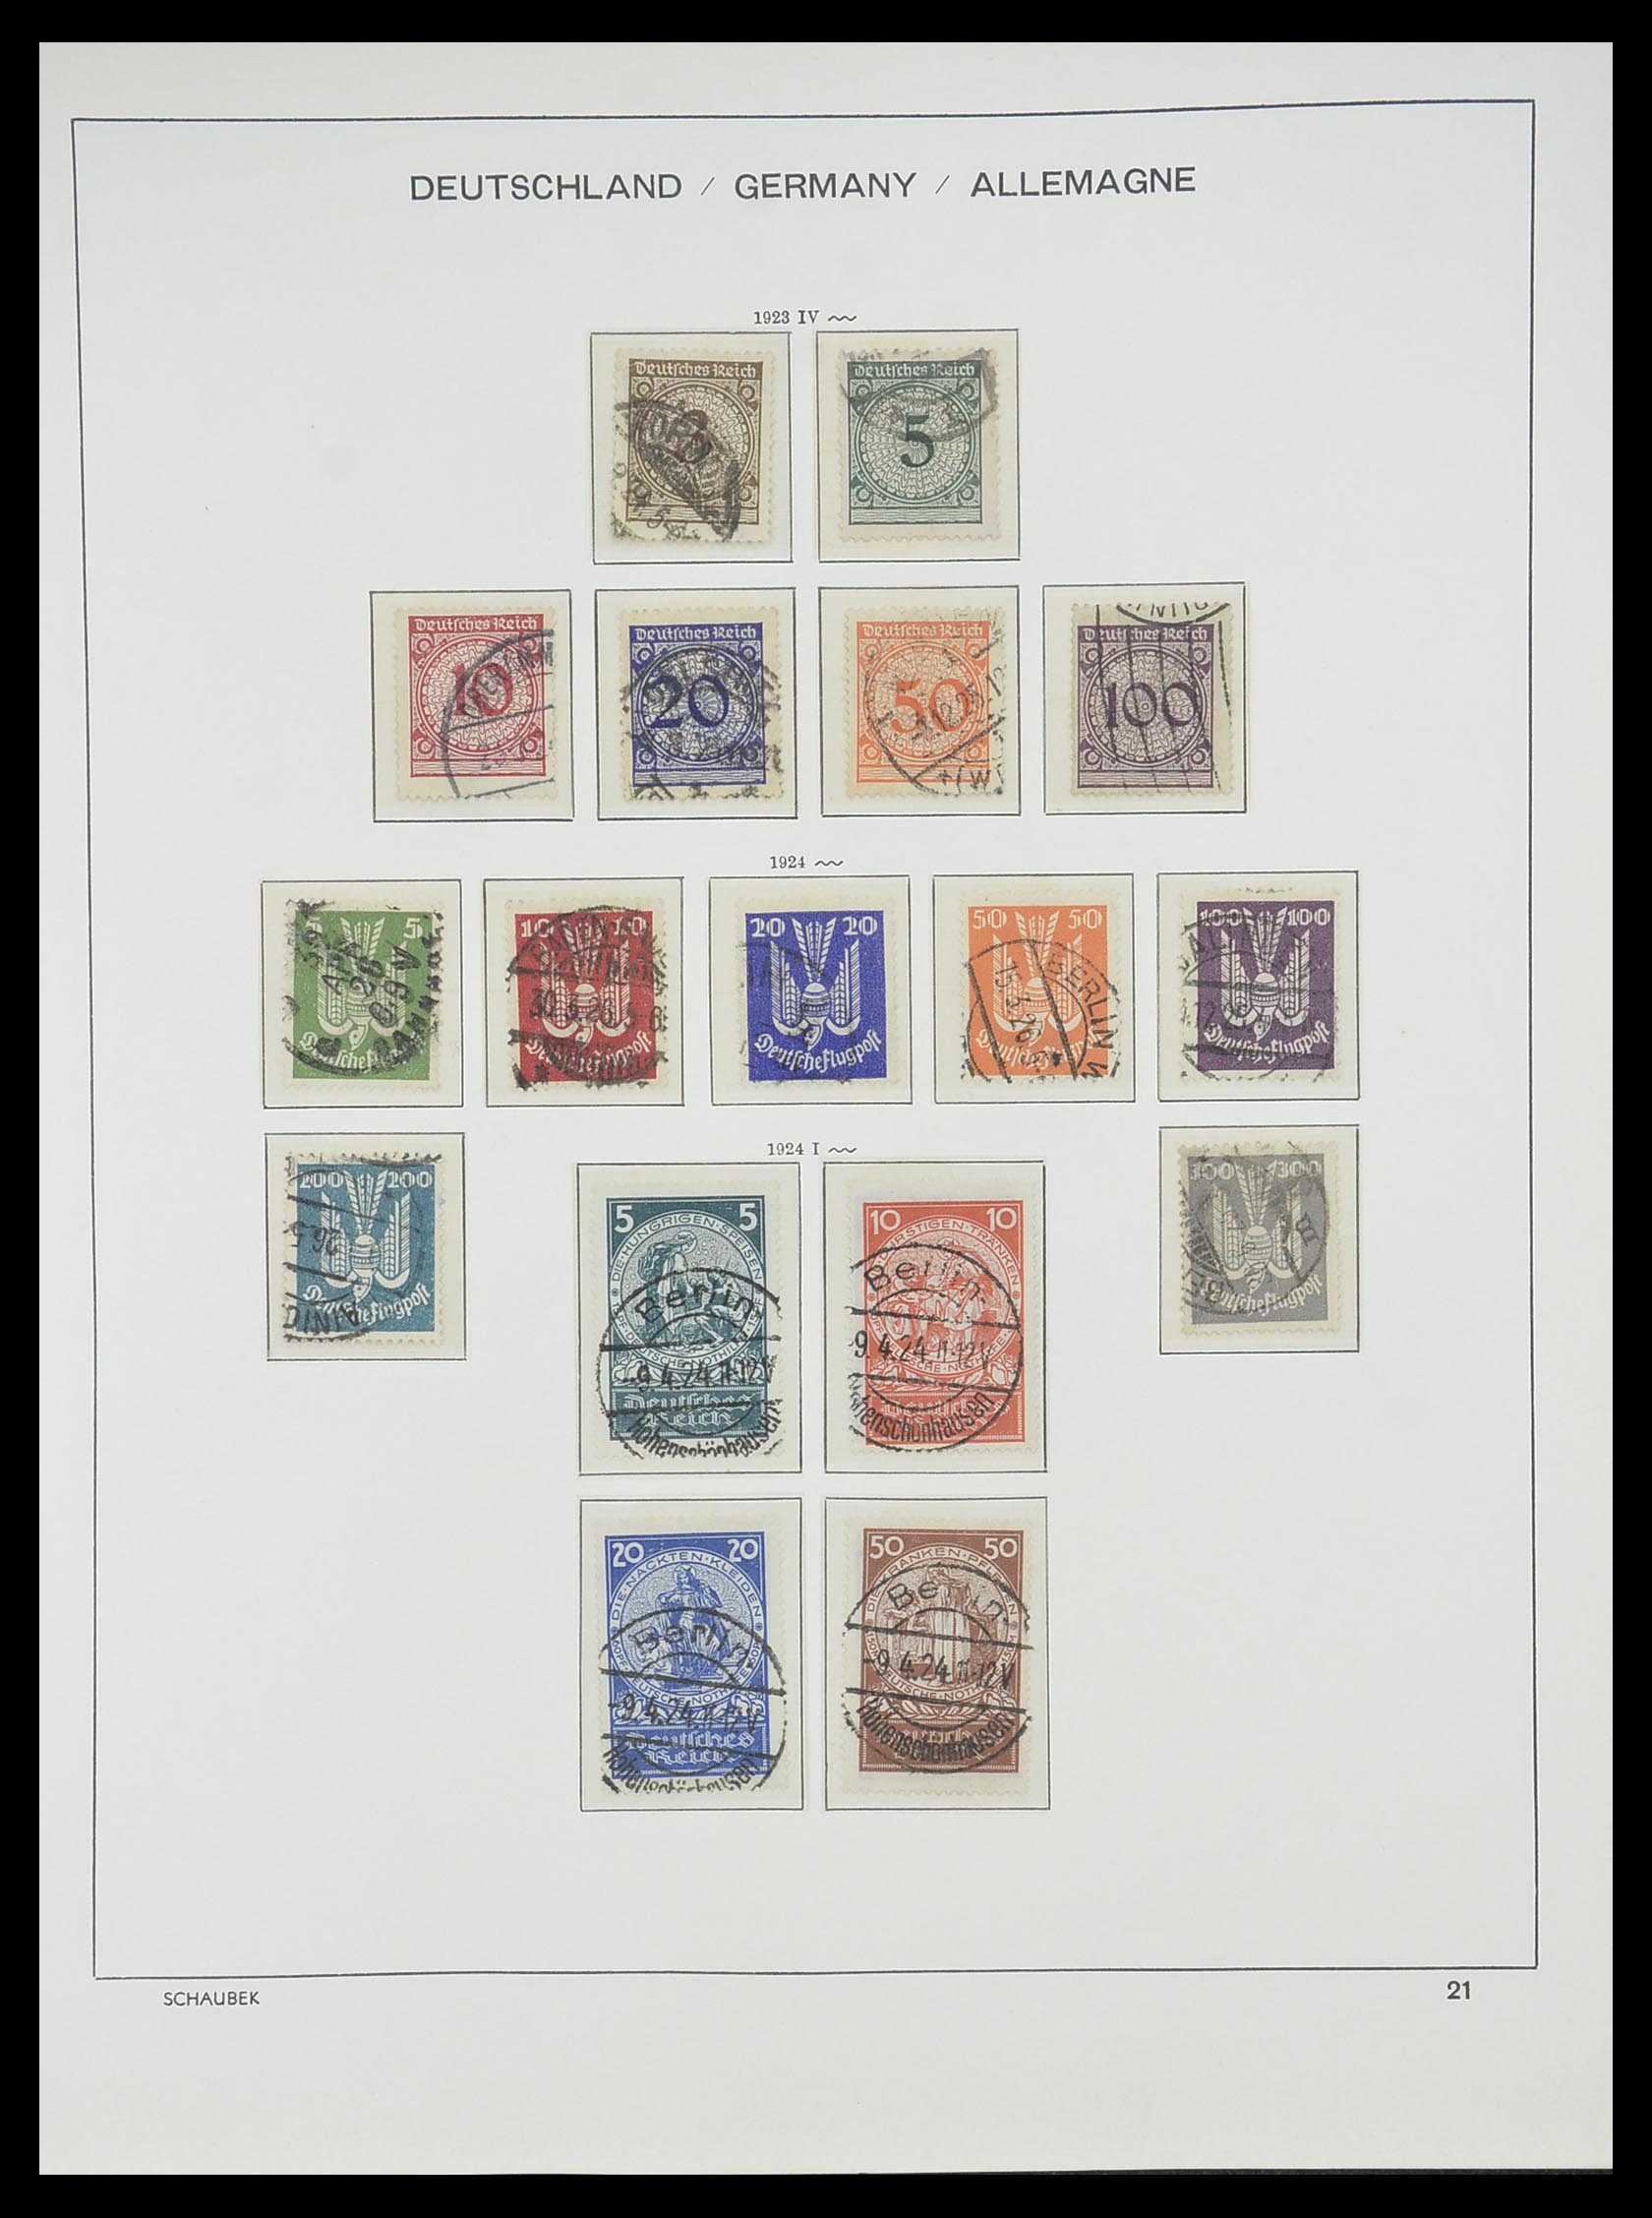 33697 021 - Stamp collection 33697 German Reich 1872-1945.